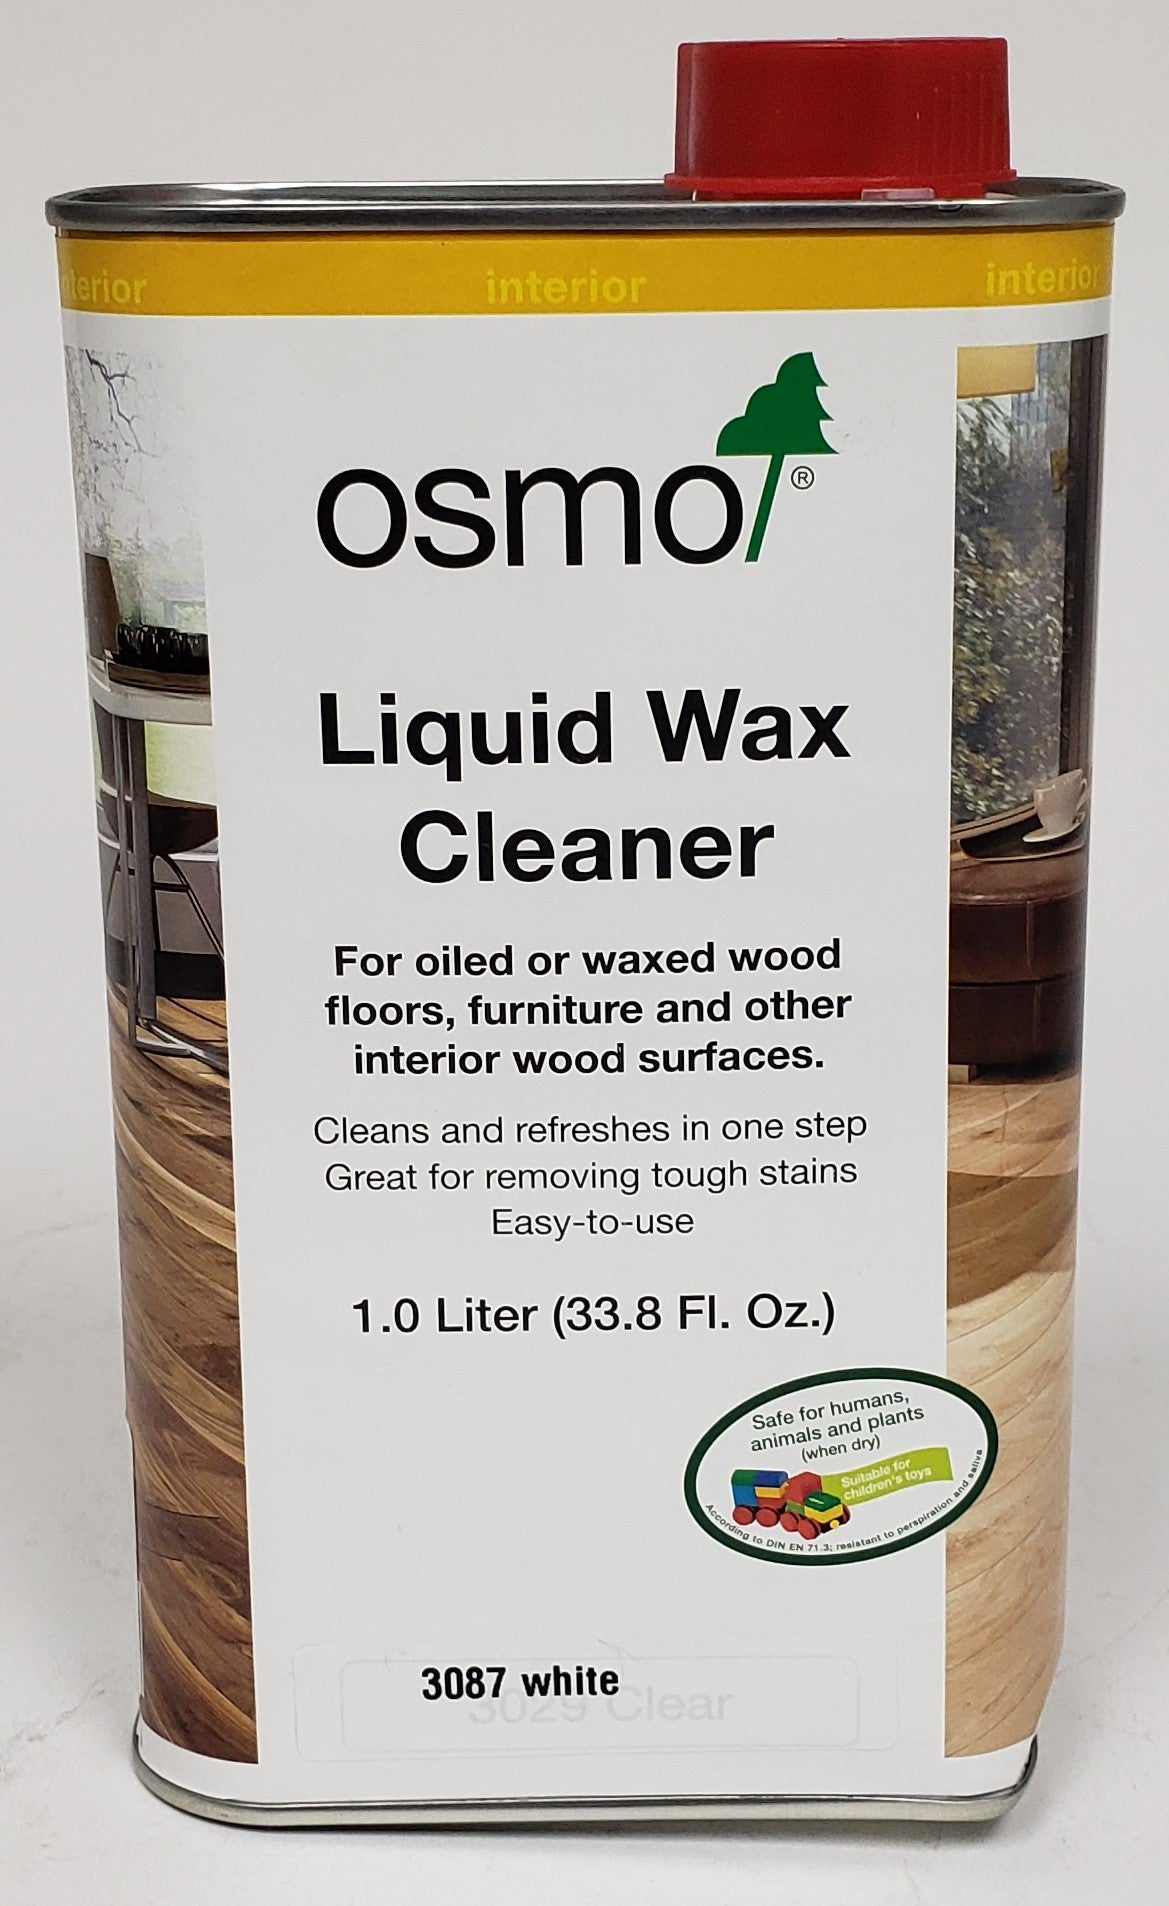 Osmo White Wood Wax, Osmo 3111 White Wood Wax, 375ml (12.5 fl oz)